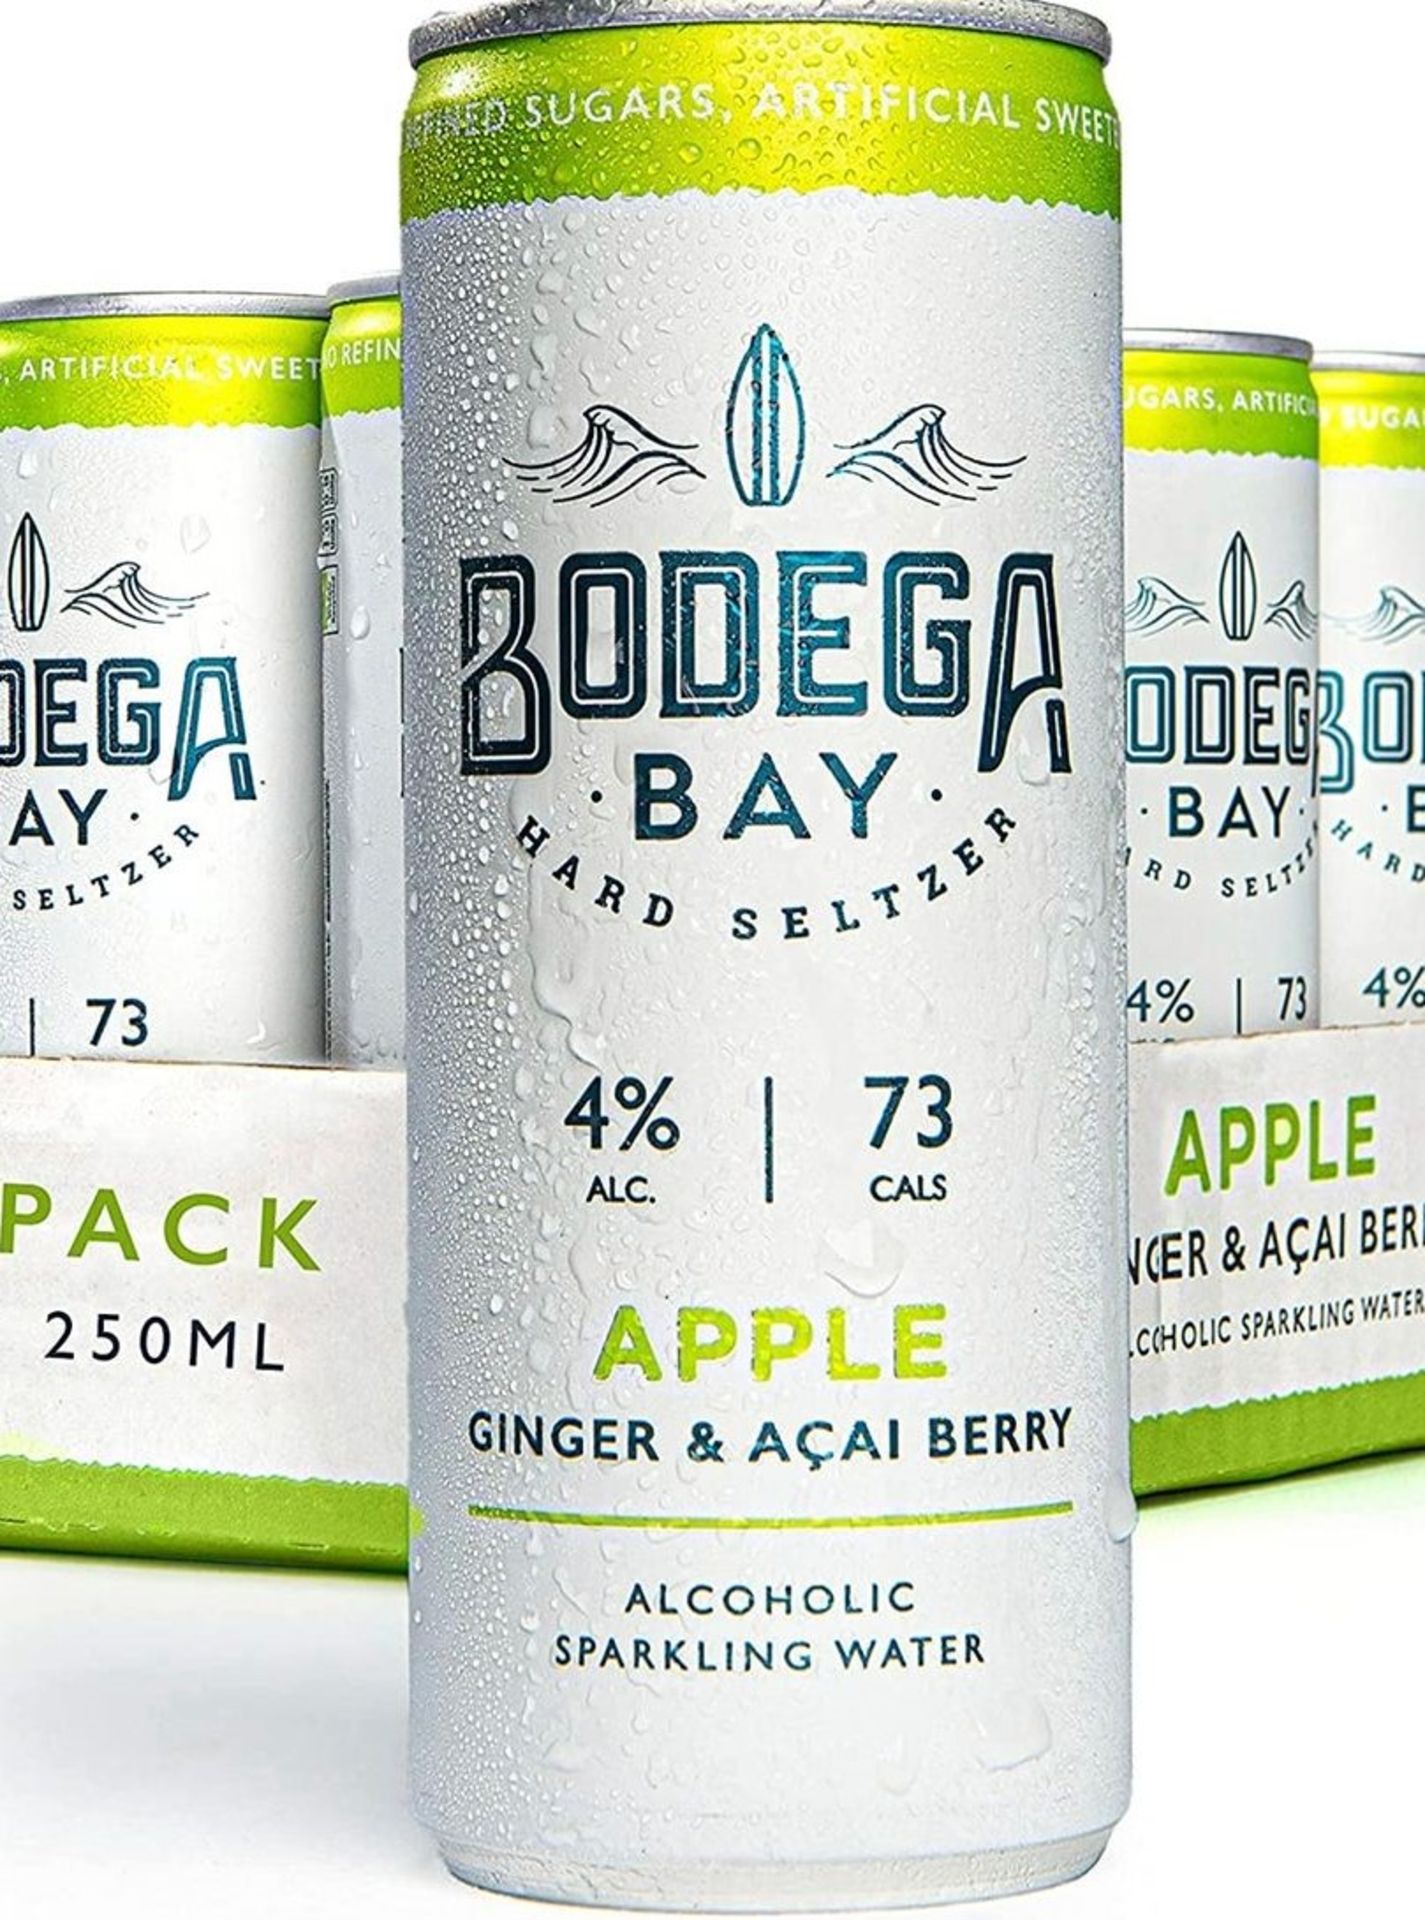 24 x Bodega Bay Hard Seltzer 250ml Alcoholic Sparkling Water Drinks - Apple Ginger & Acai Berry - 4% - Image 4 of 8